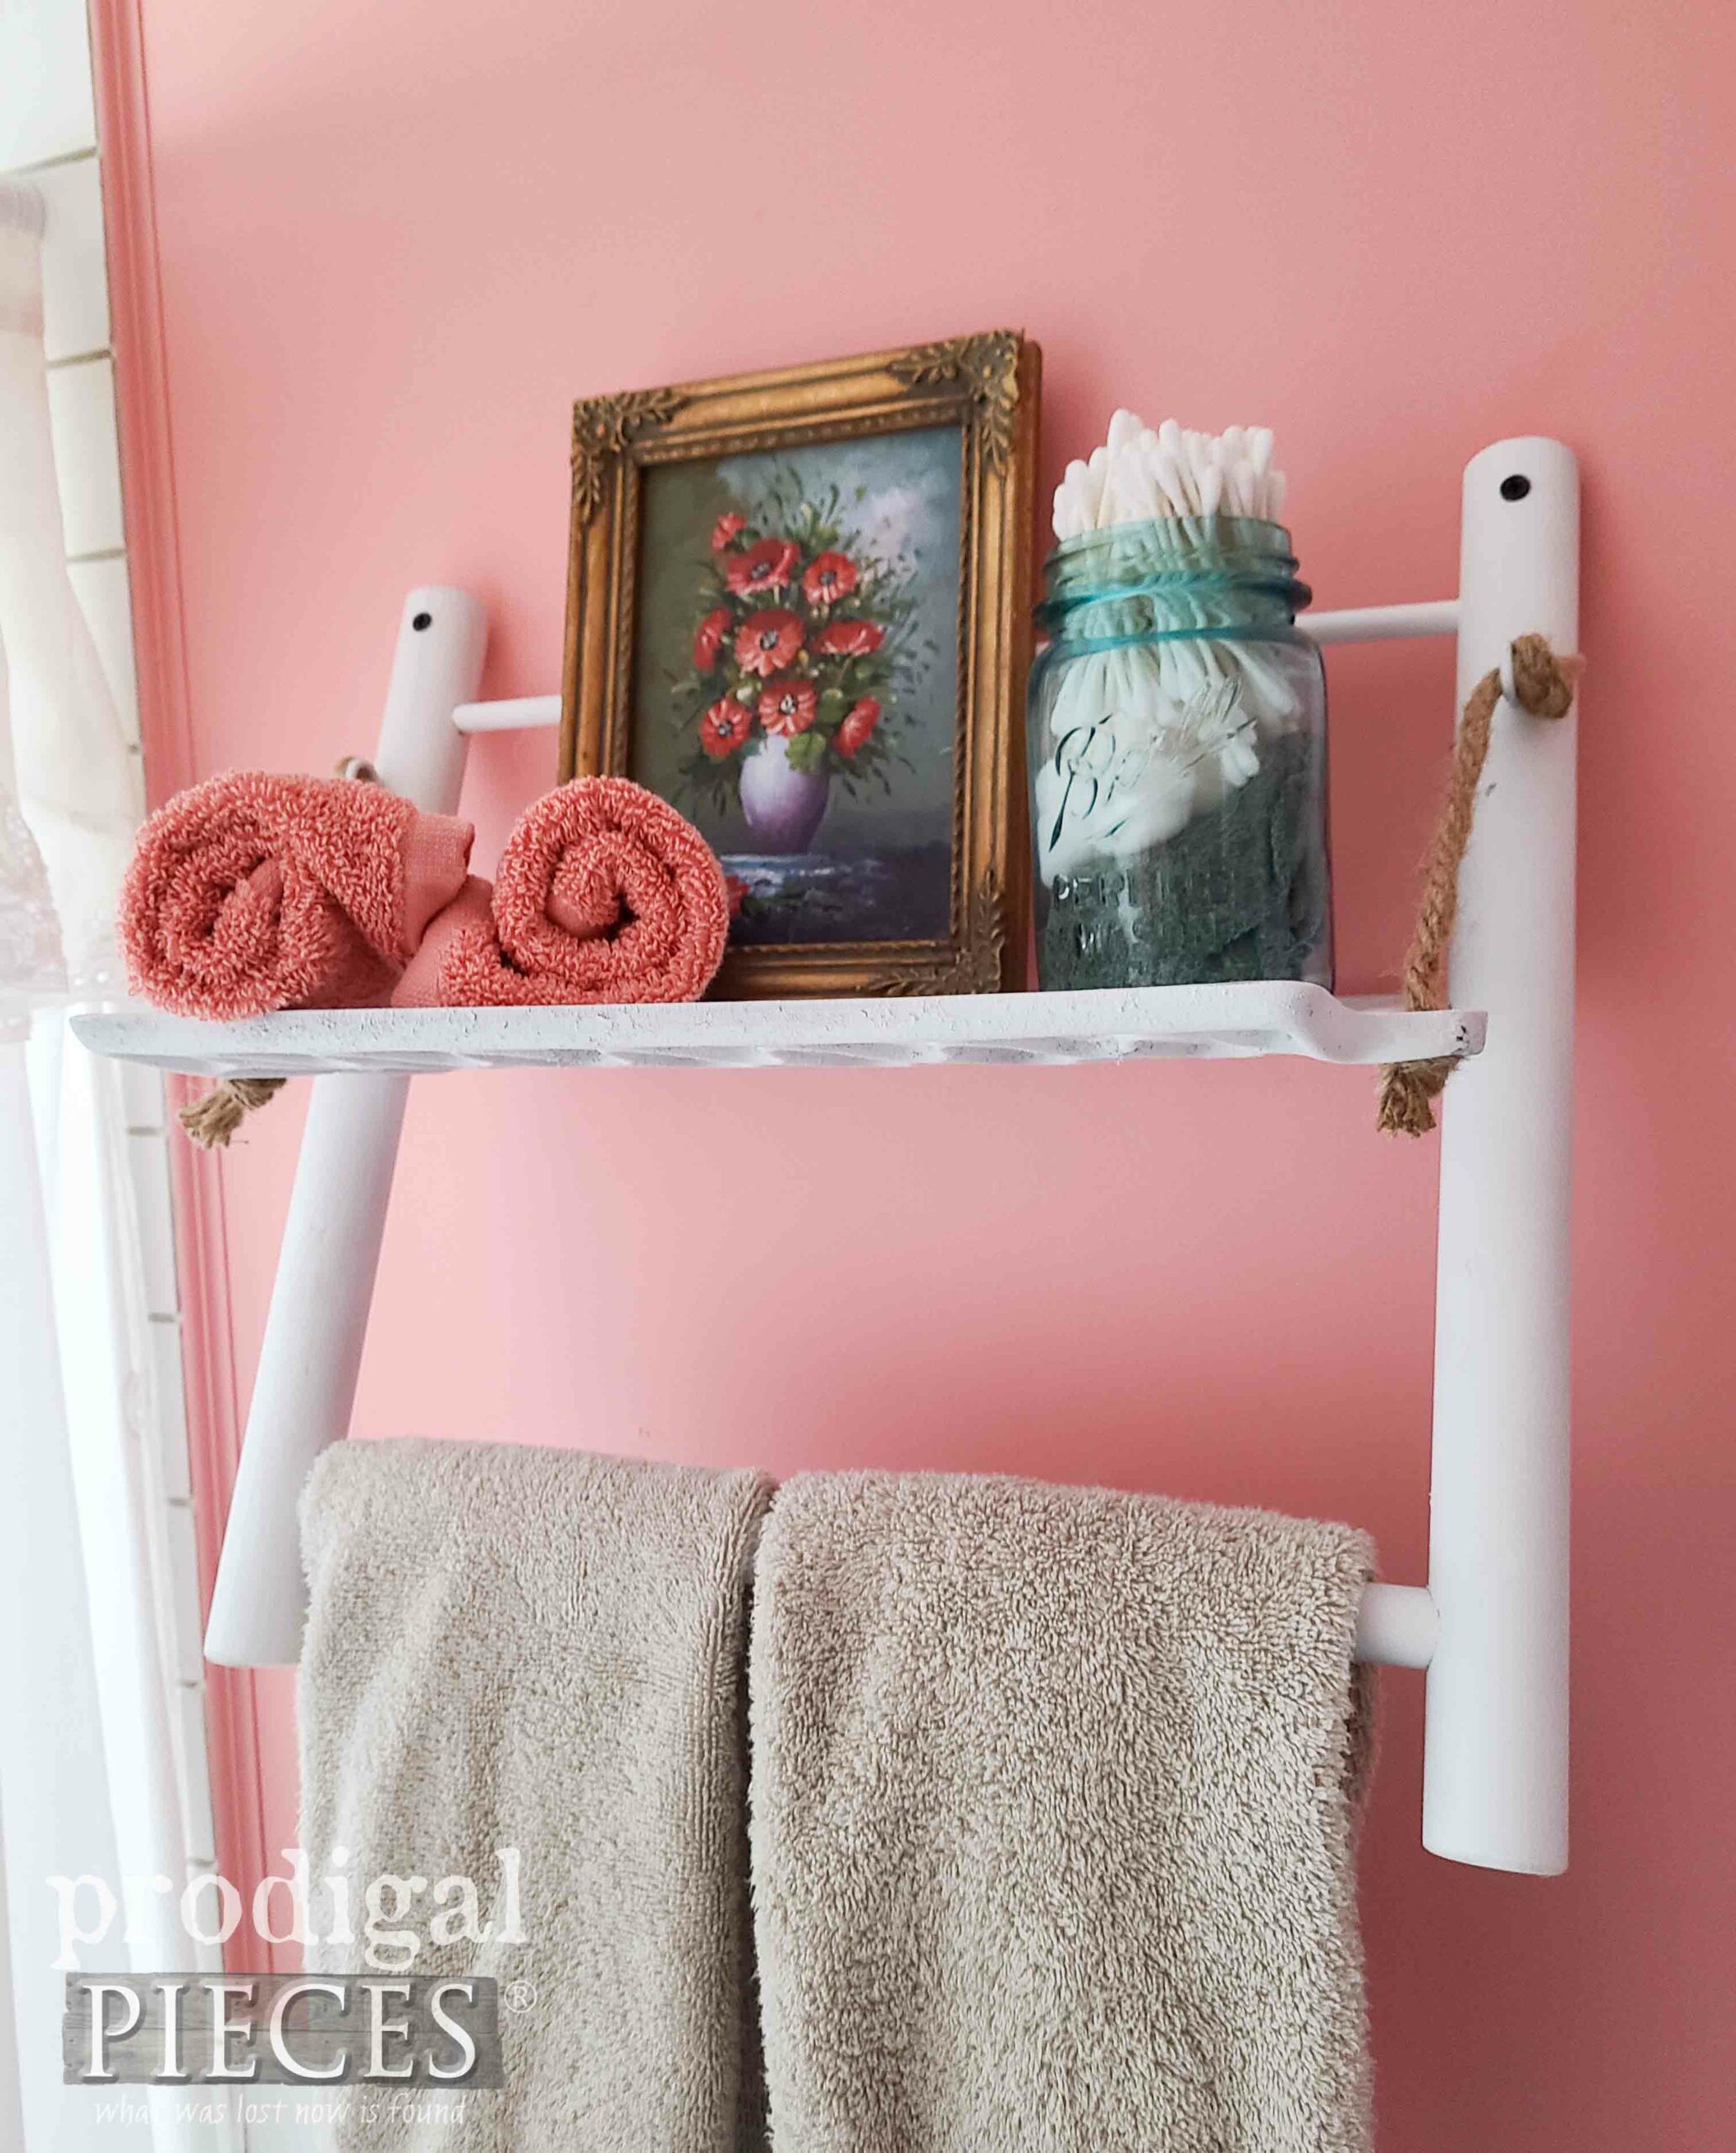 Repurposed Towel Shelf in Bathroom | prodigalpieces.com #prodigalpieces